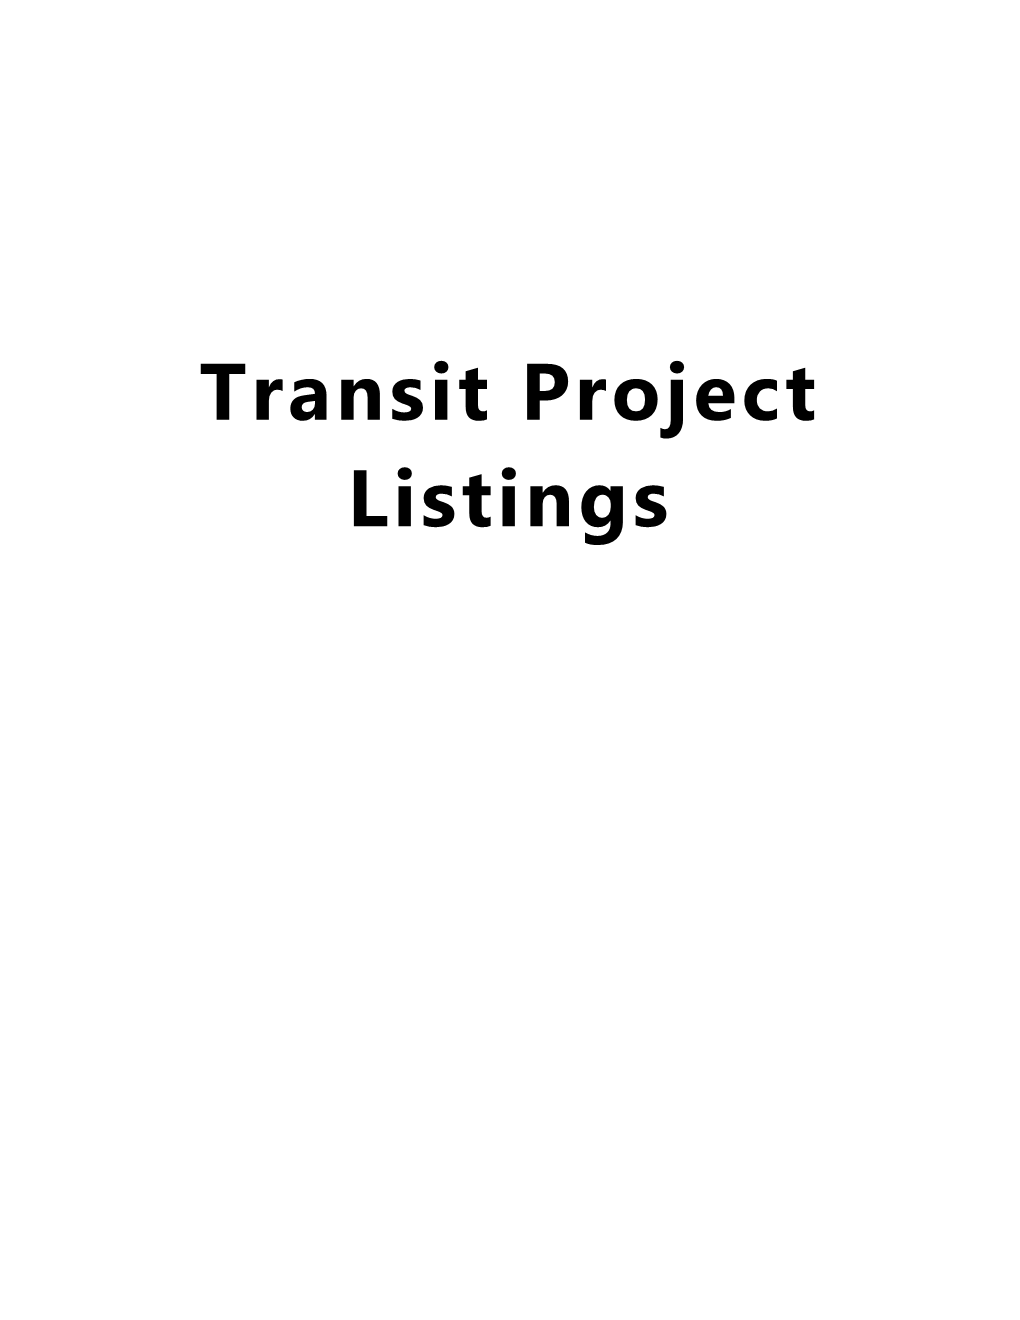 Transit Project Listings